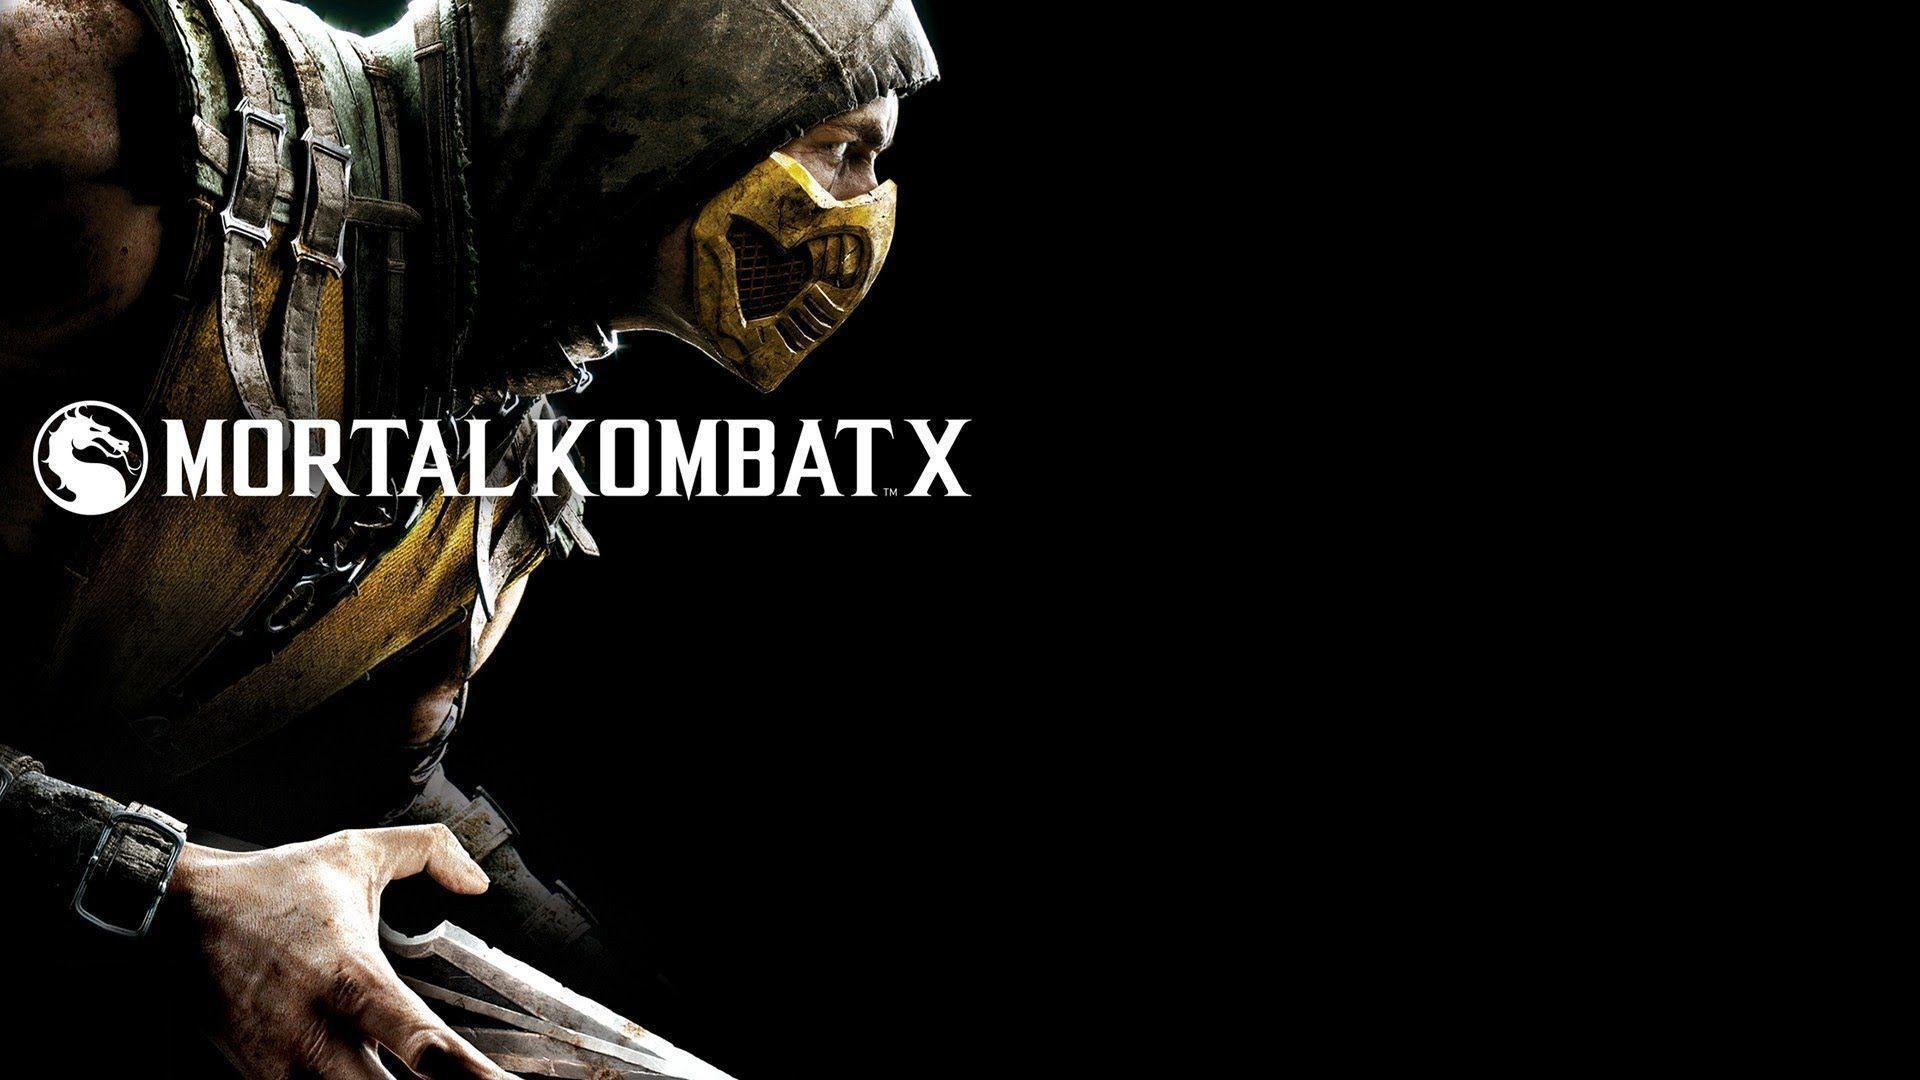 Mortal Kombat X Wallpaper High Quality